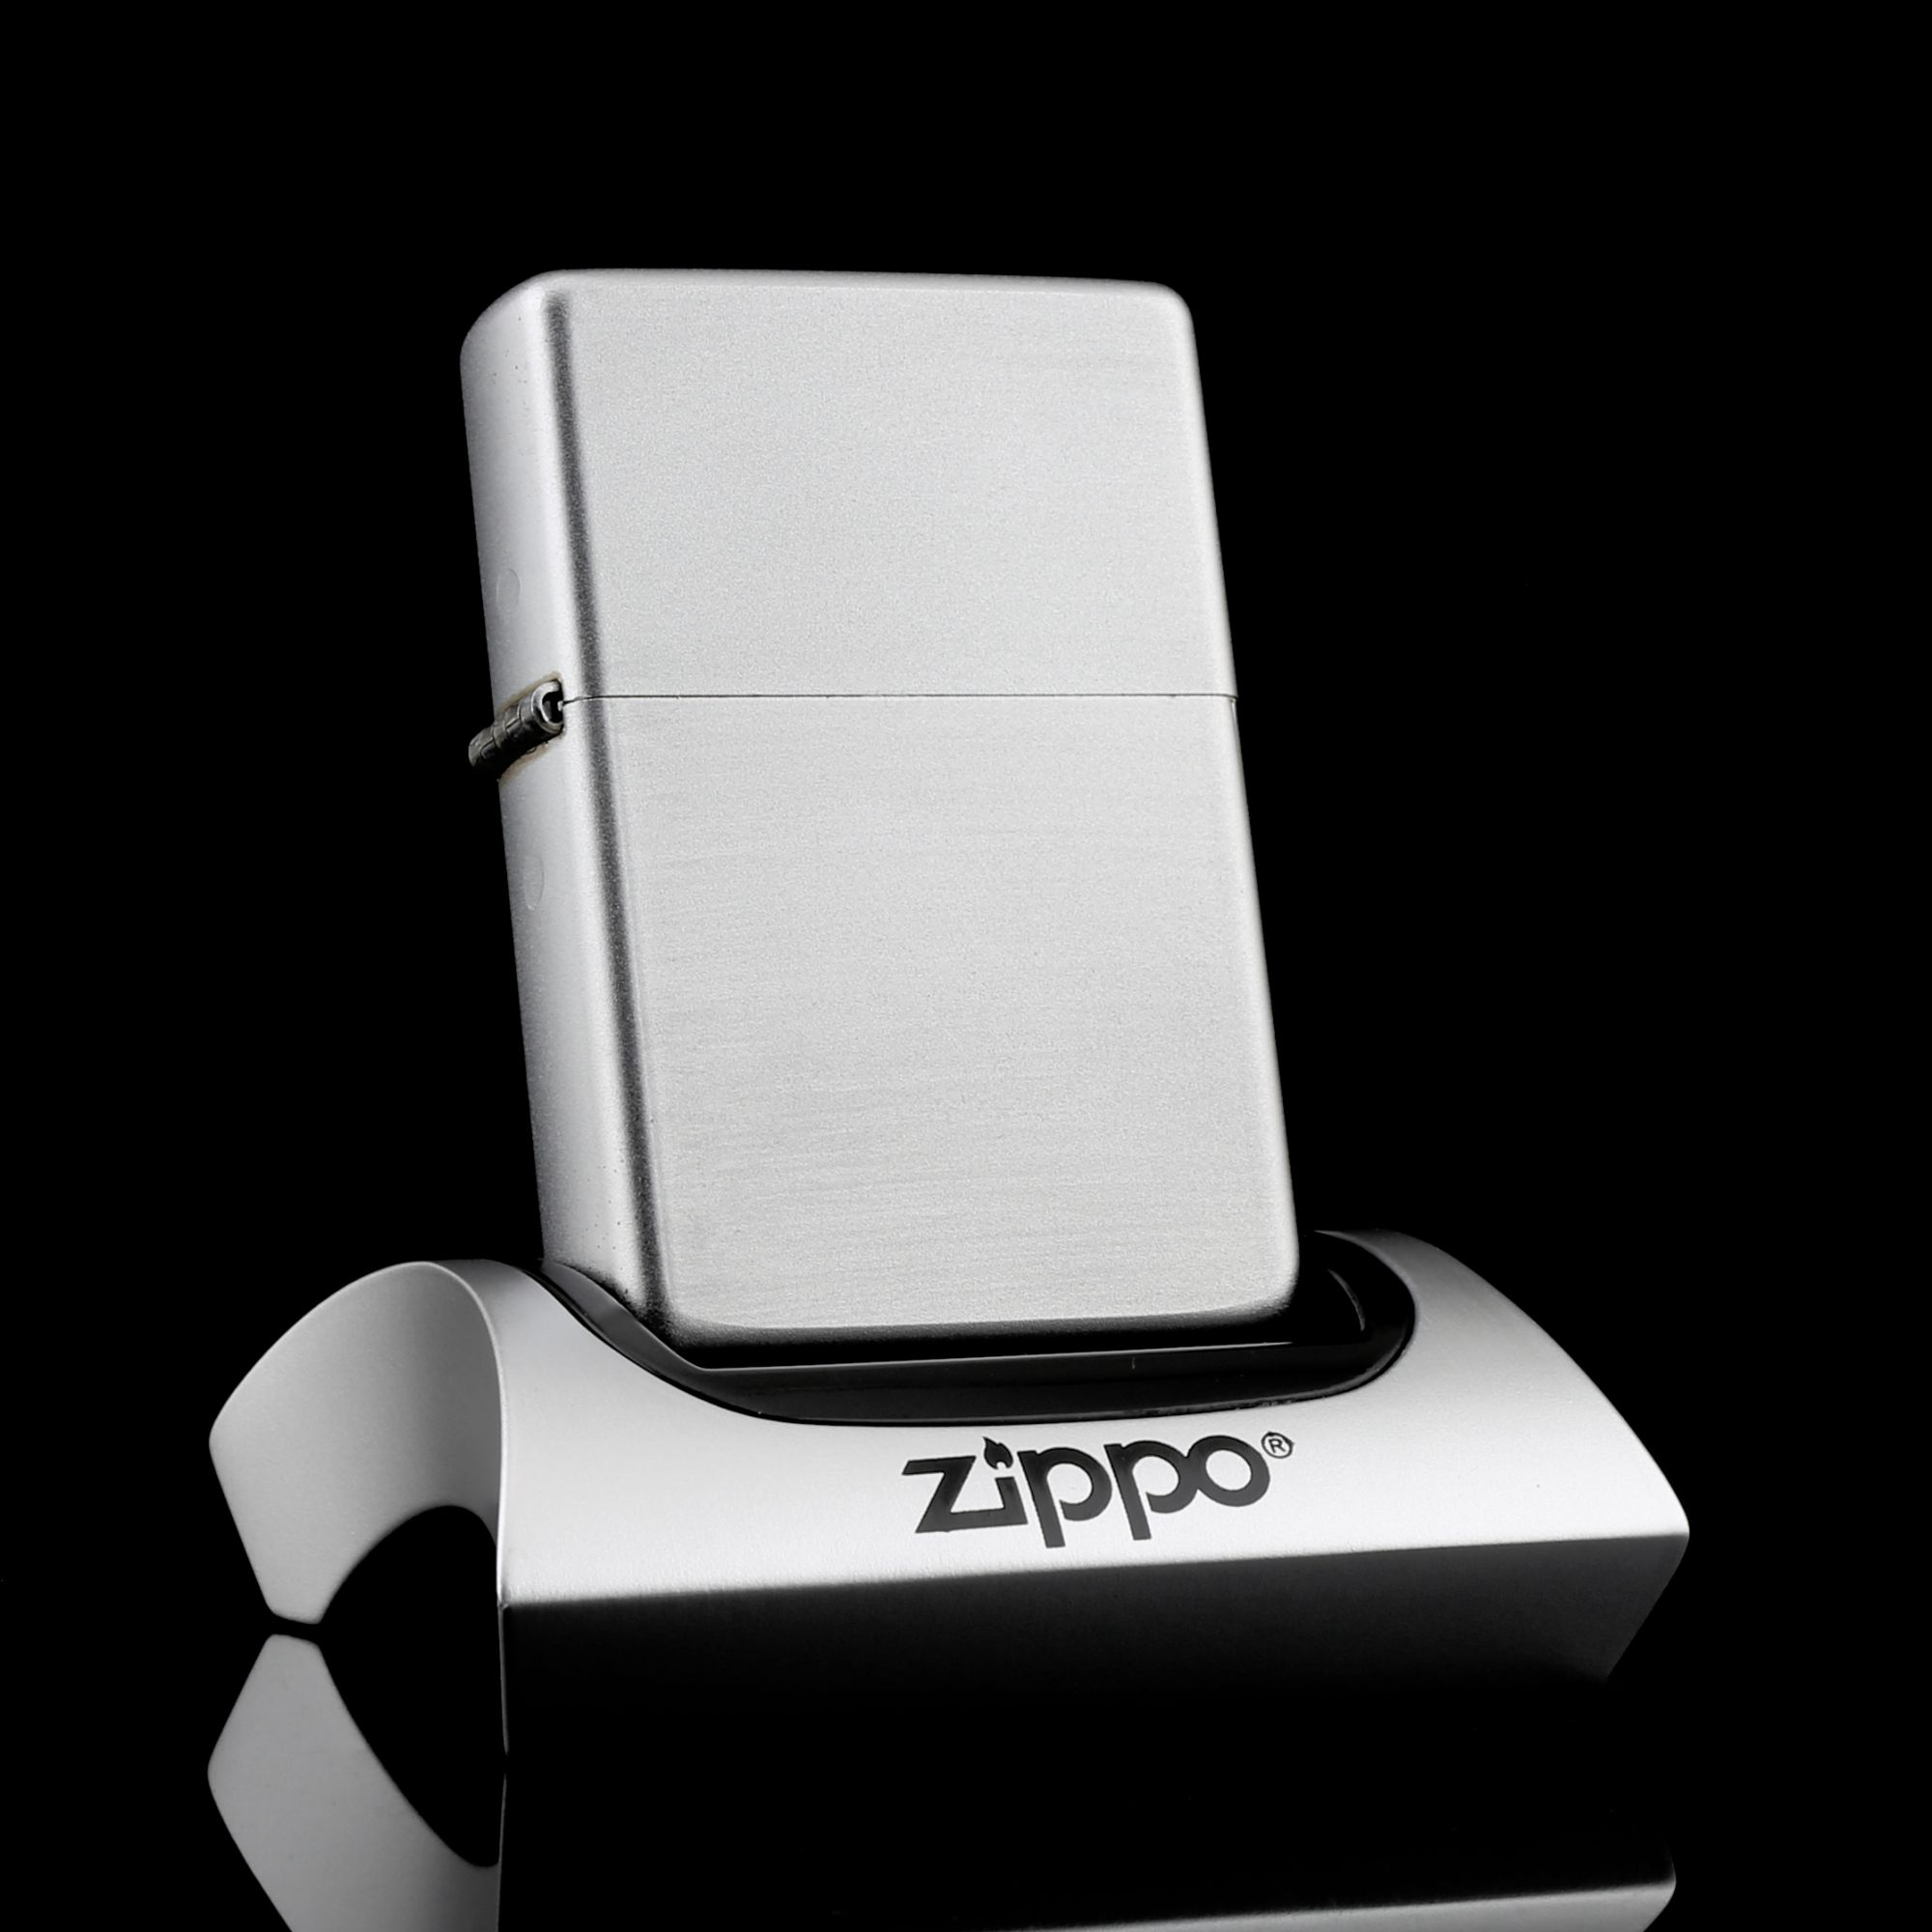 Zippo-Niken-super-rare-sieu-hiem-doc-ban-limited-edition-cap-cap-dang-cap-cua-hang-suu-tam-uy-tin